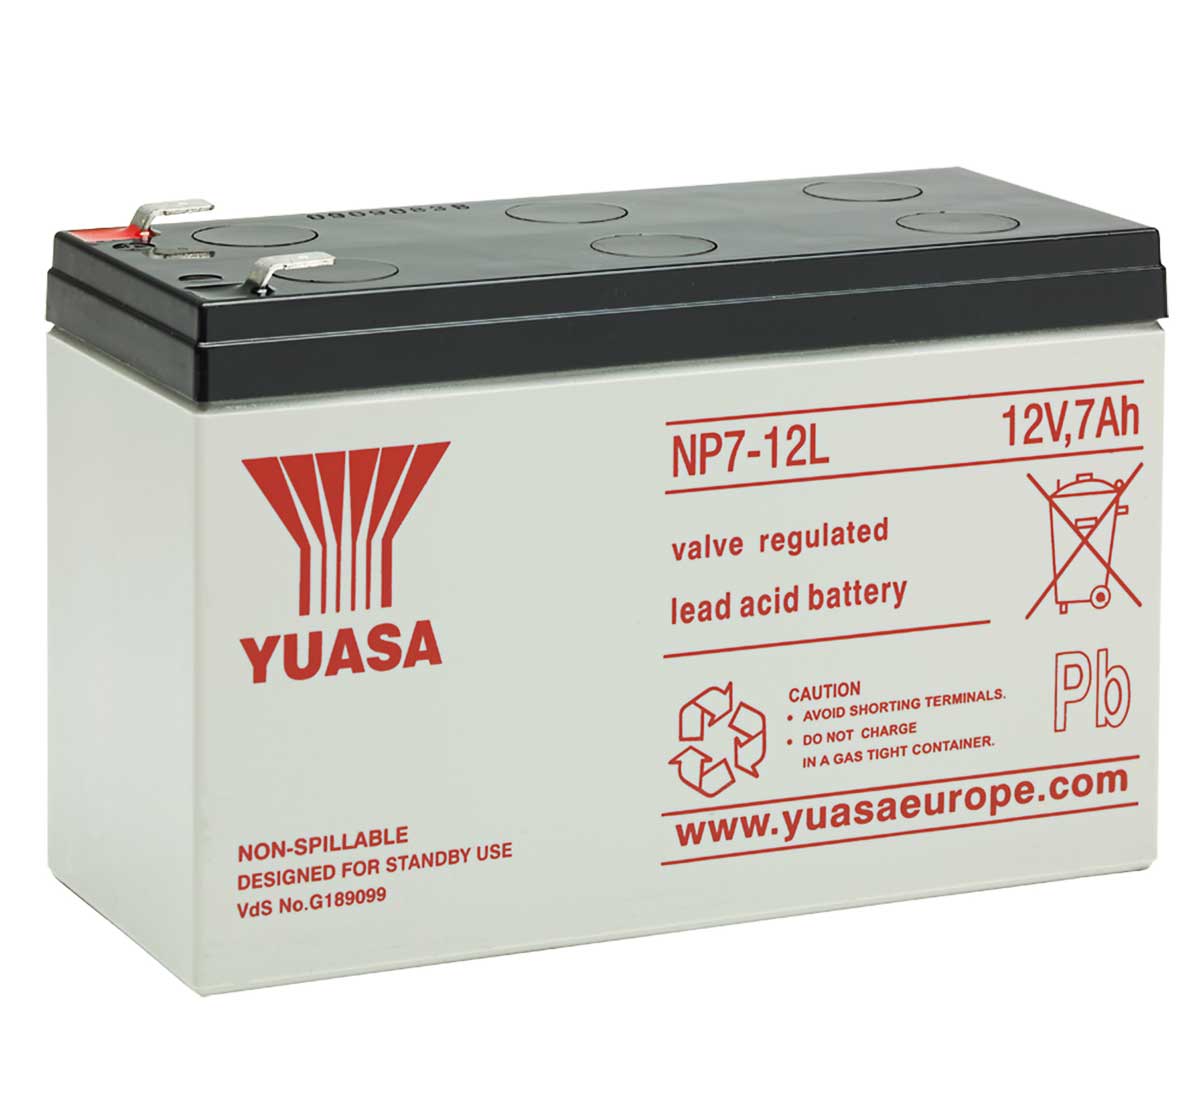 Yuasa NP7-12L 12V 7Ah VRLA Lead Acid Battery